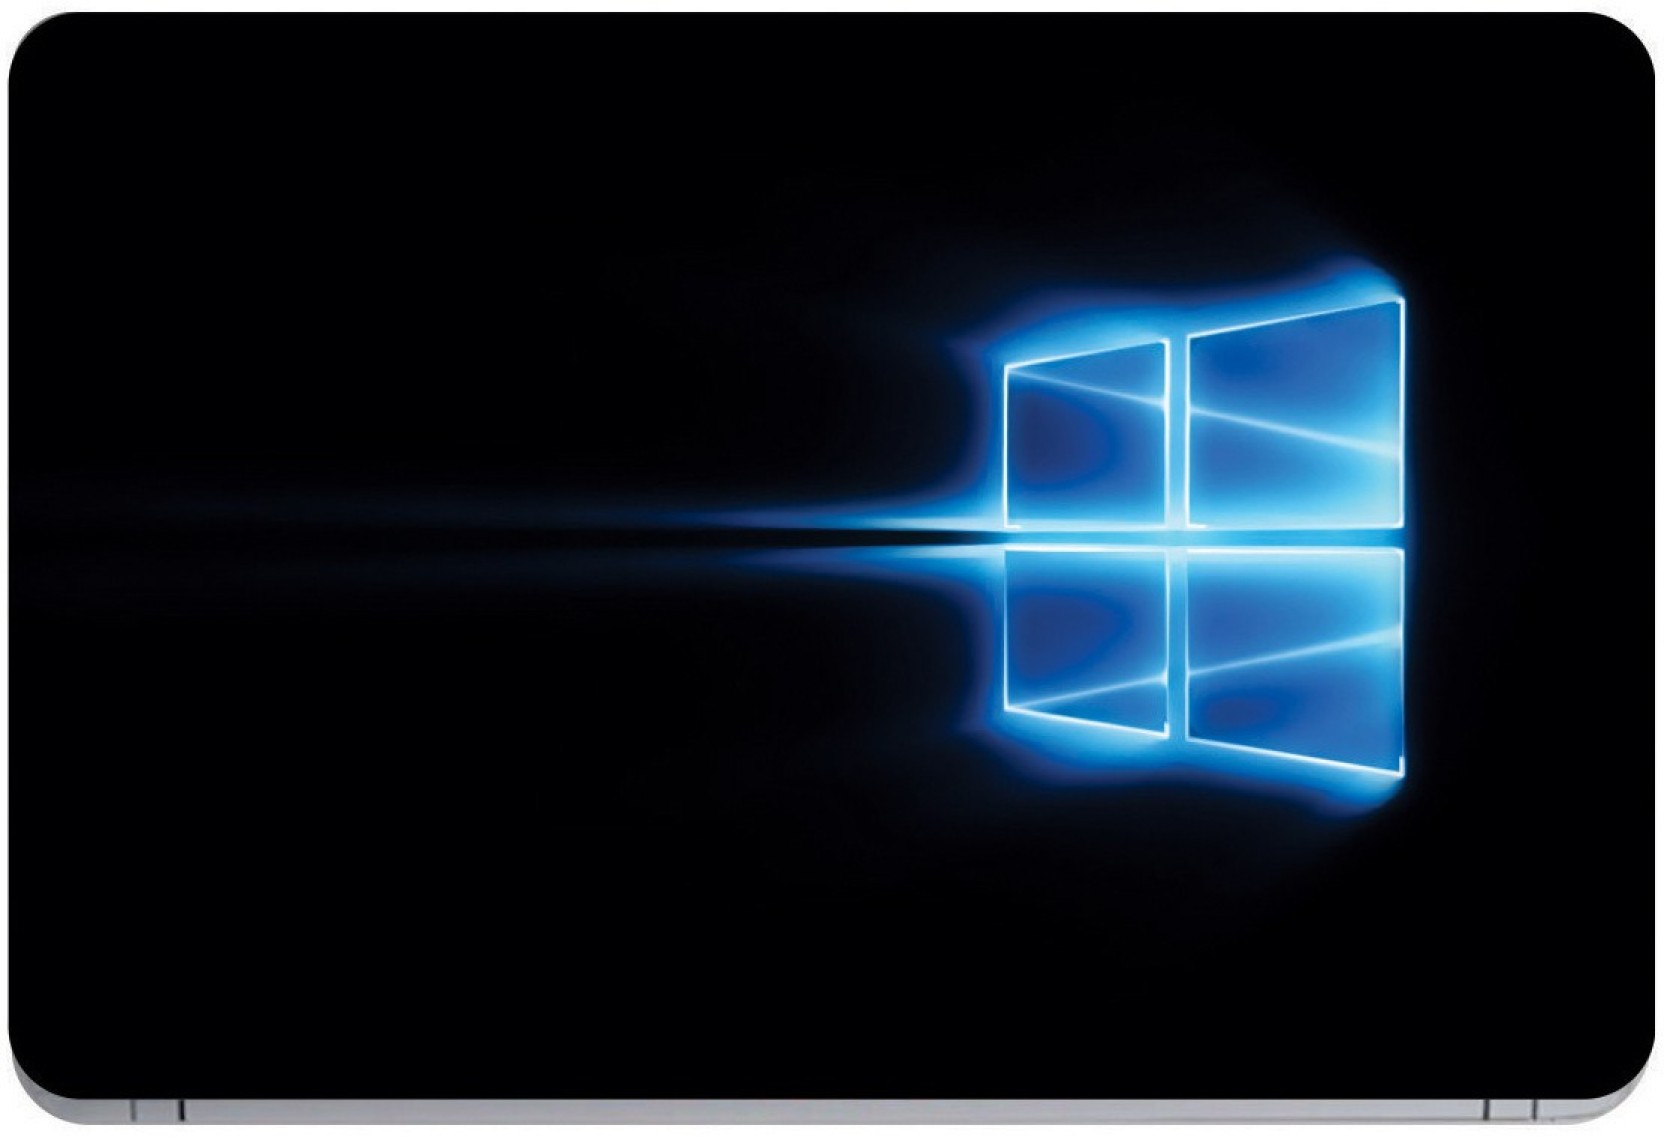 Windows 10 Background Themes Hd - 1664x1137 Wallpaper 